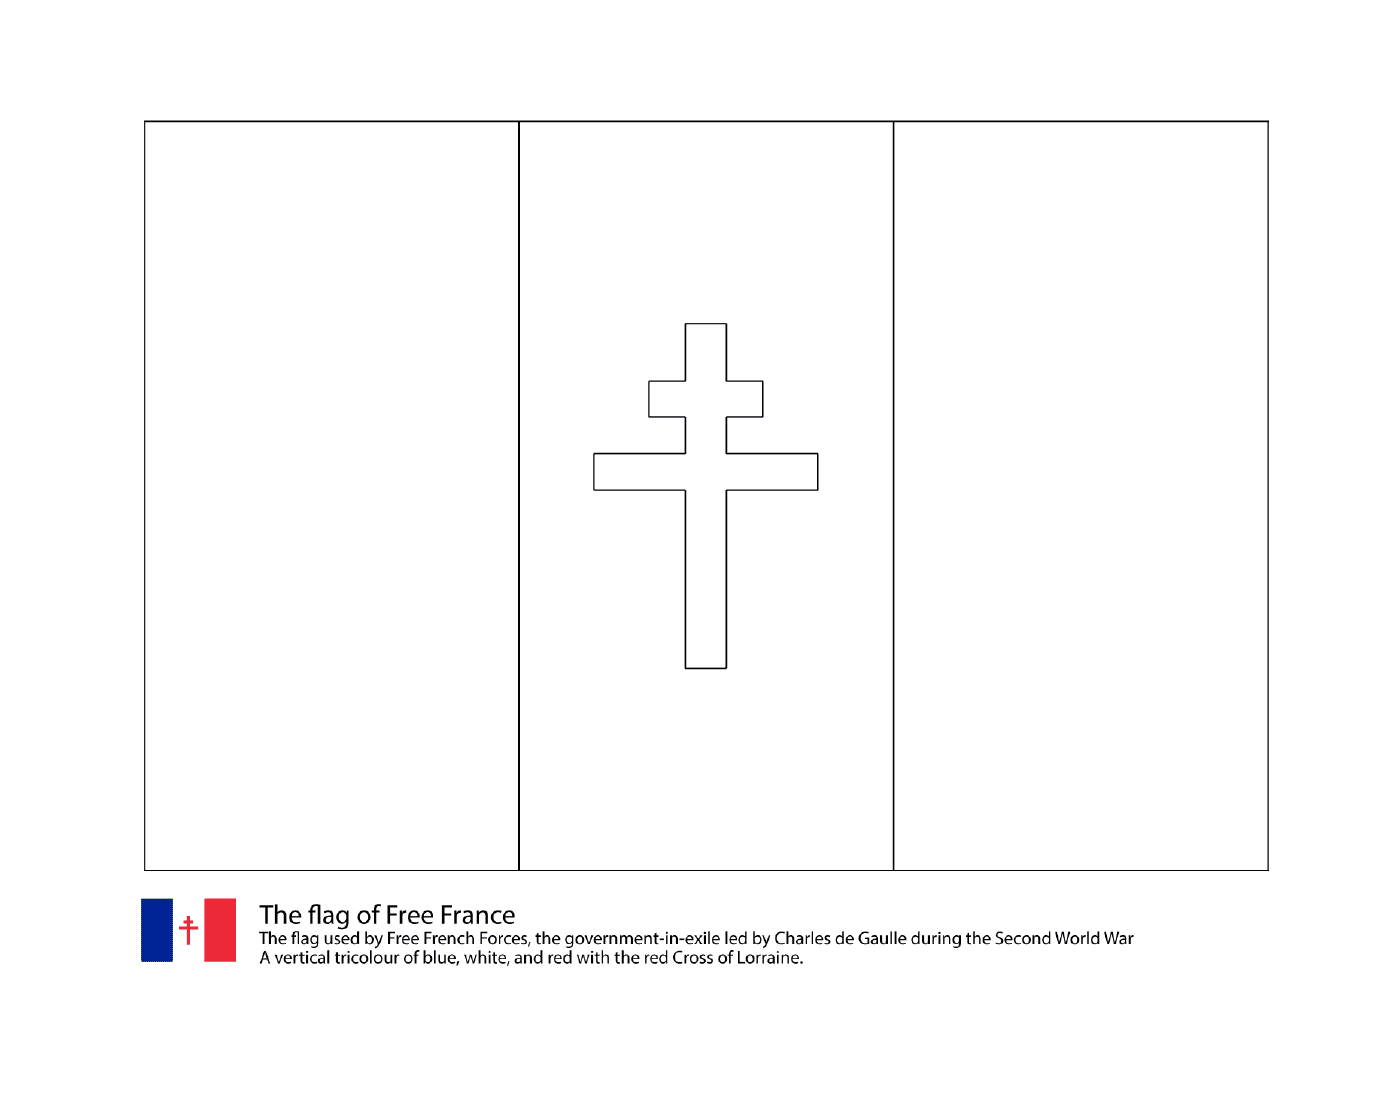   Drapeau de la France libre de 1940 à 1944 